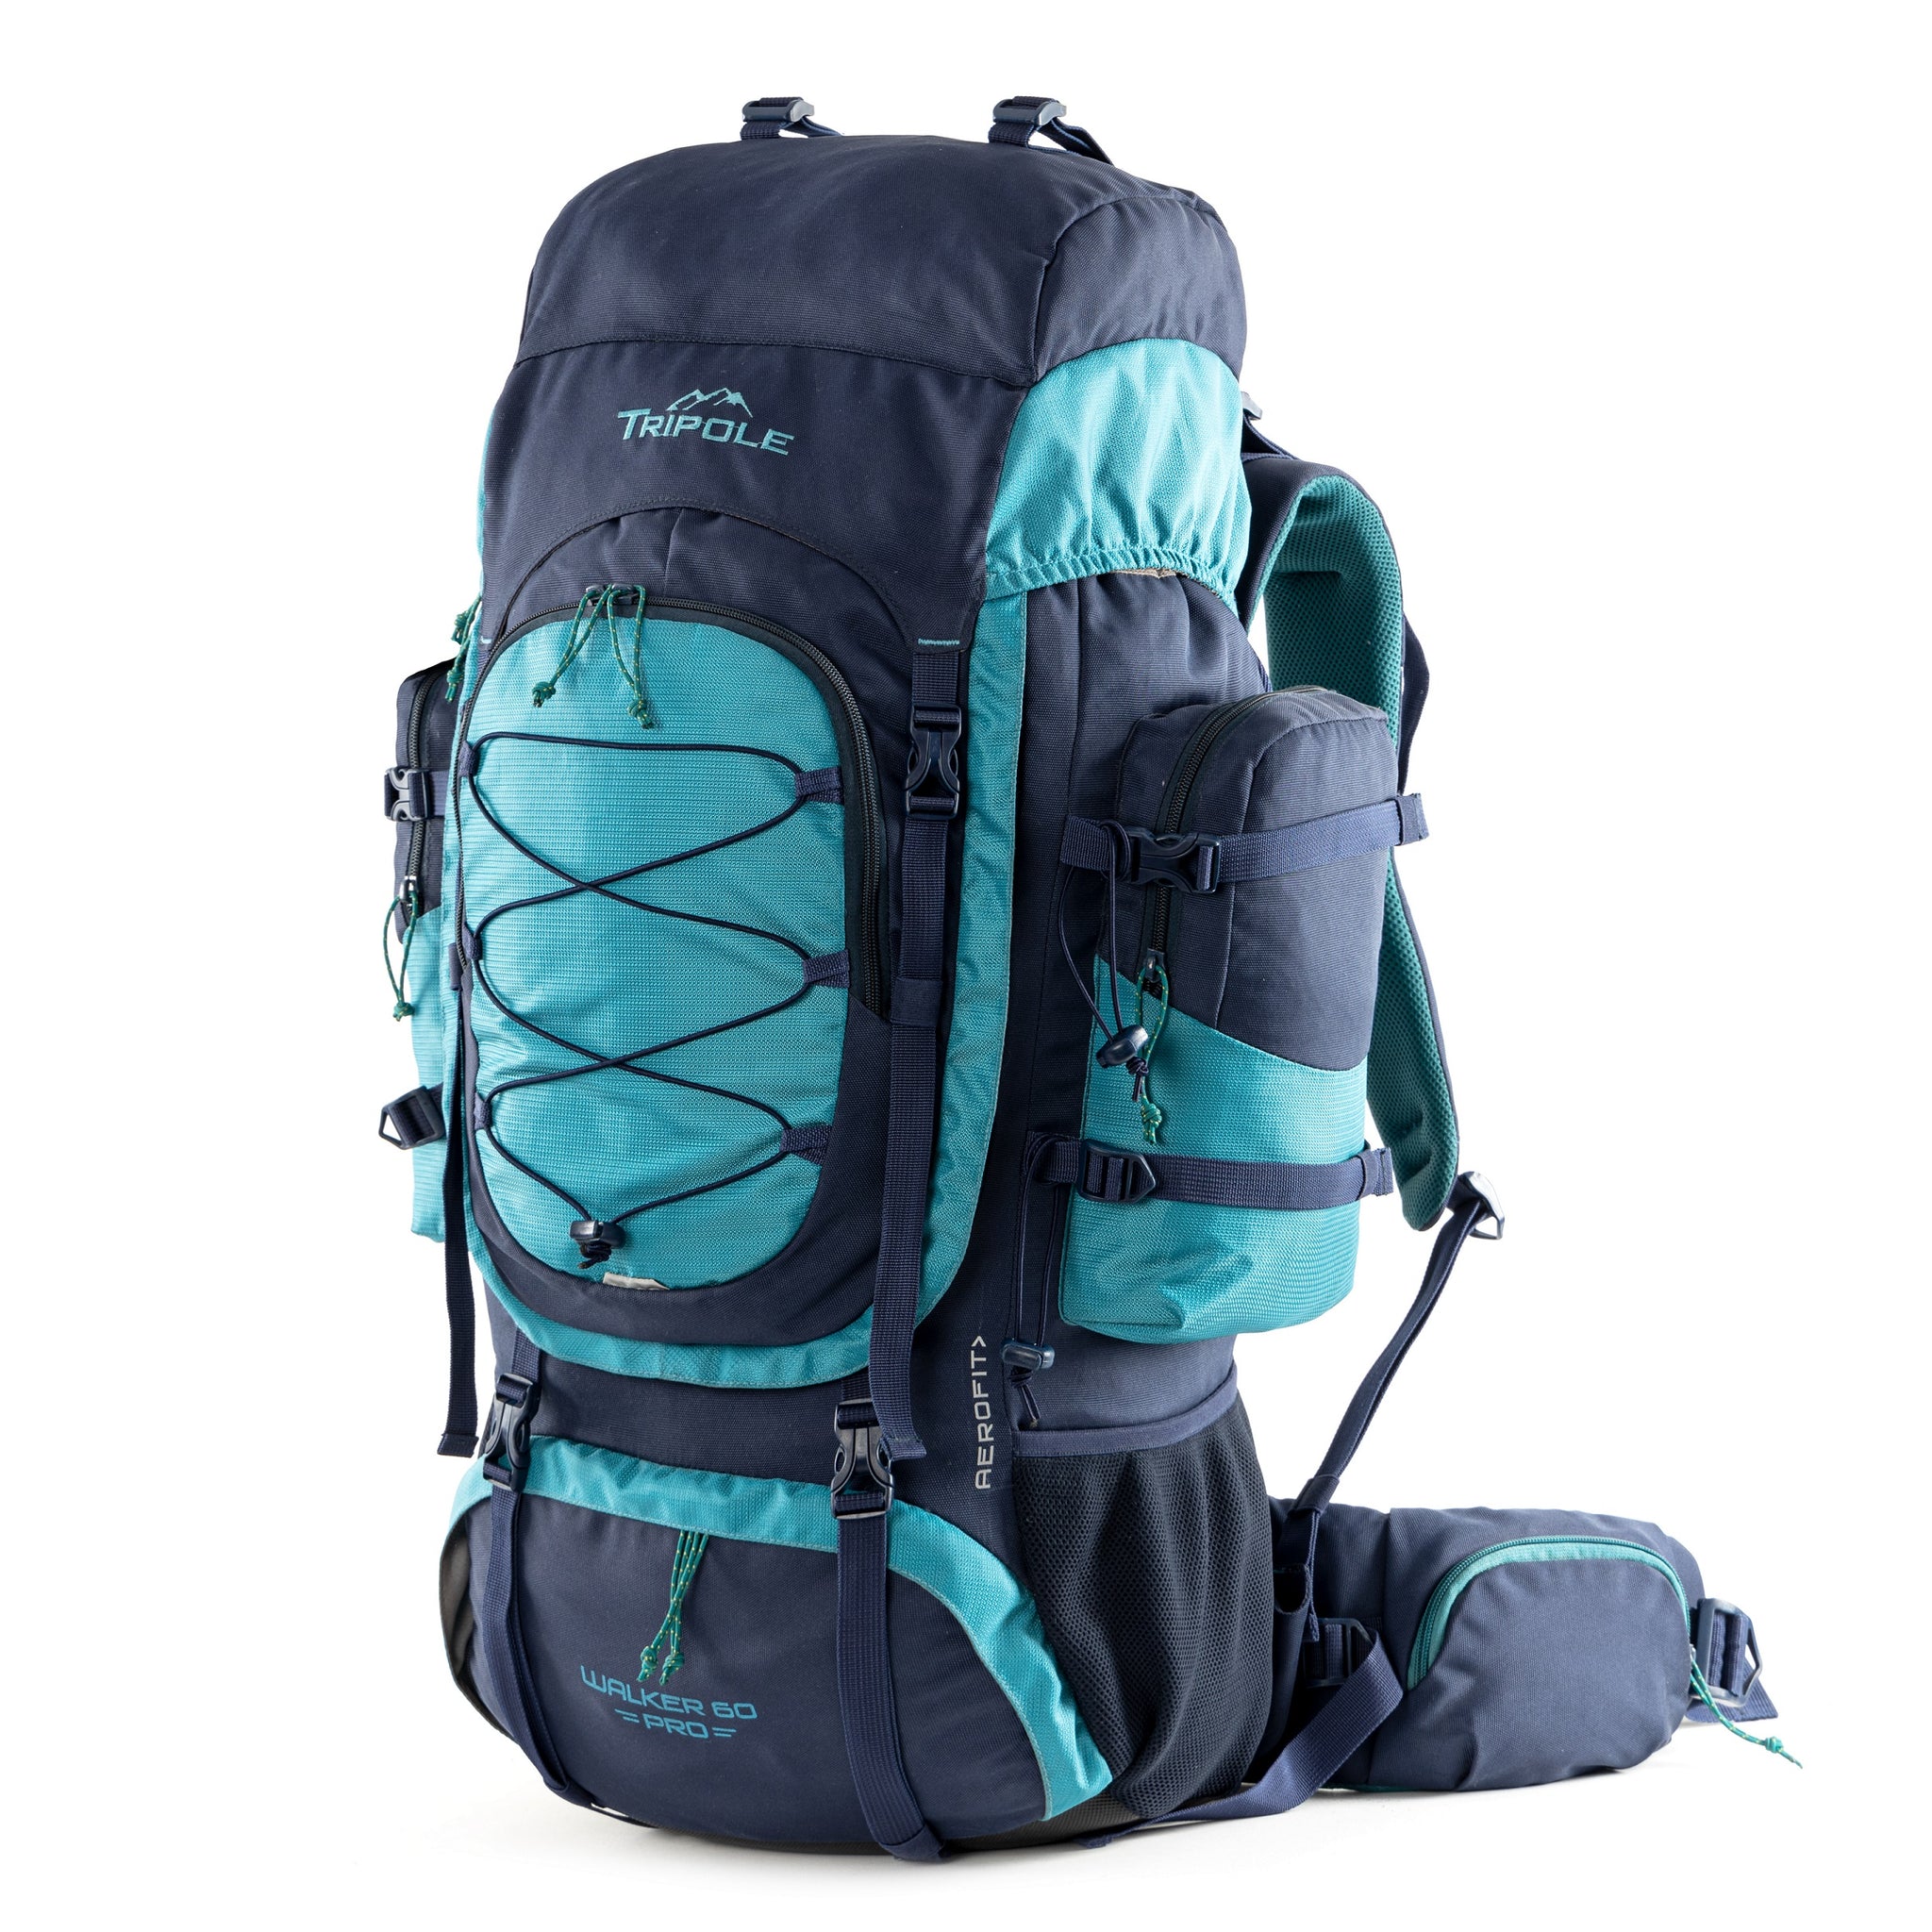 Safex Trekking Bags at Best Price in Mumbai | Sapphire Bags